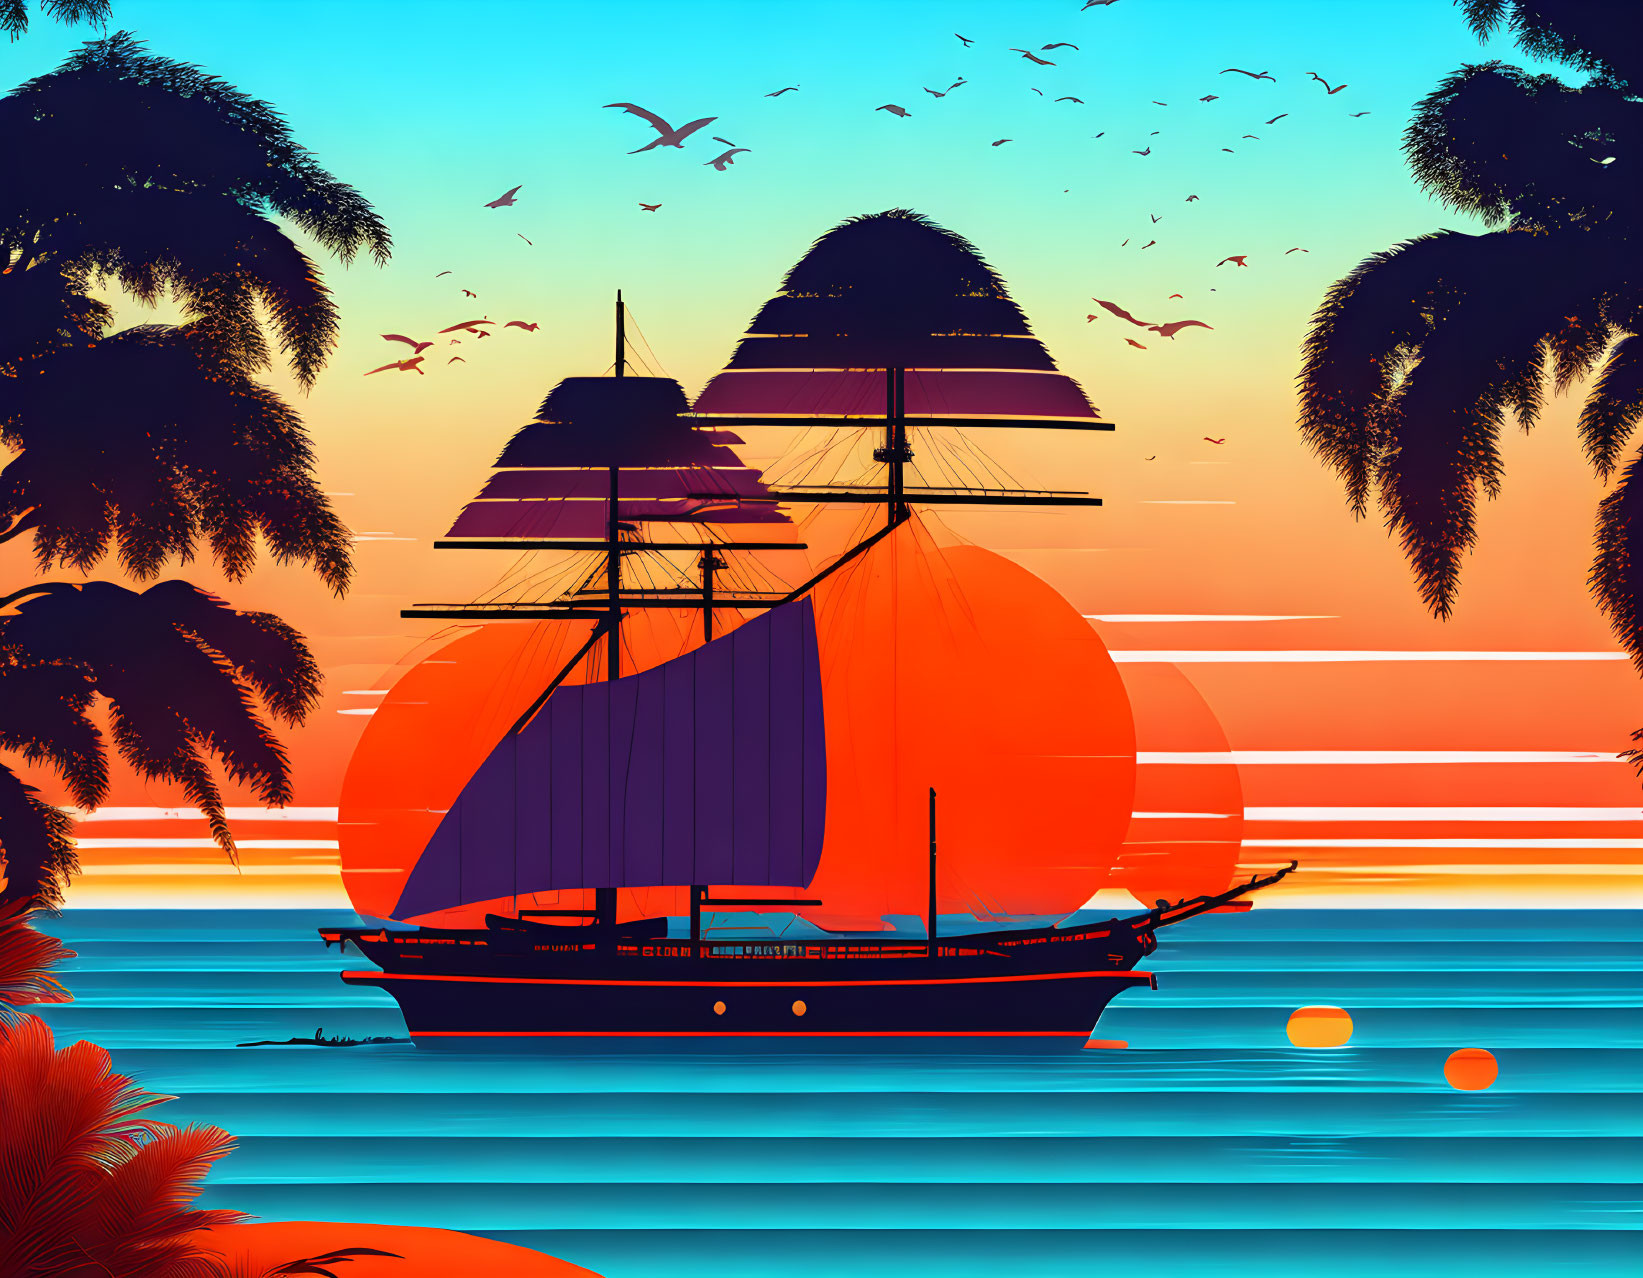 "Pirate's Bay Sunset